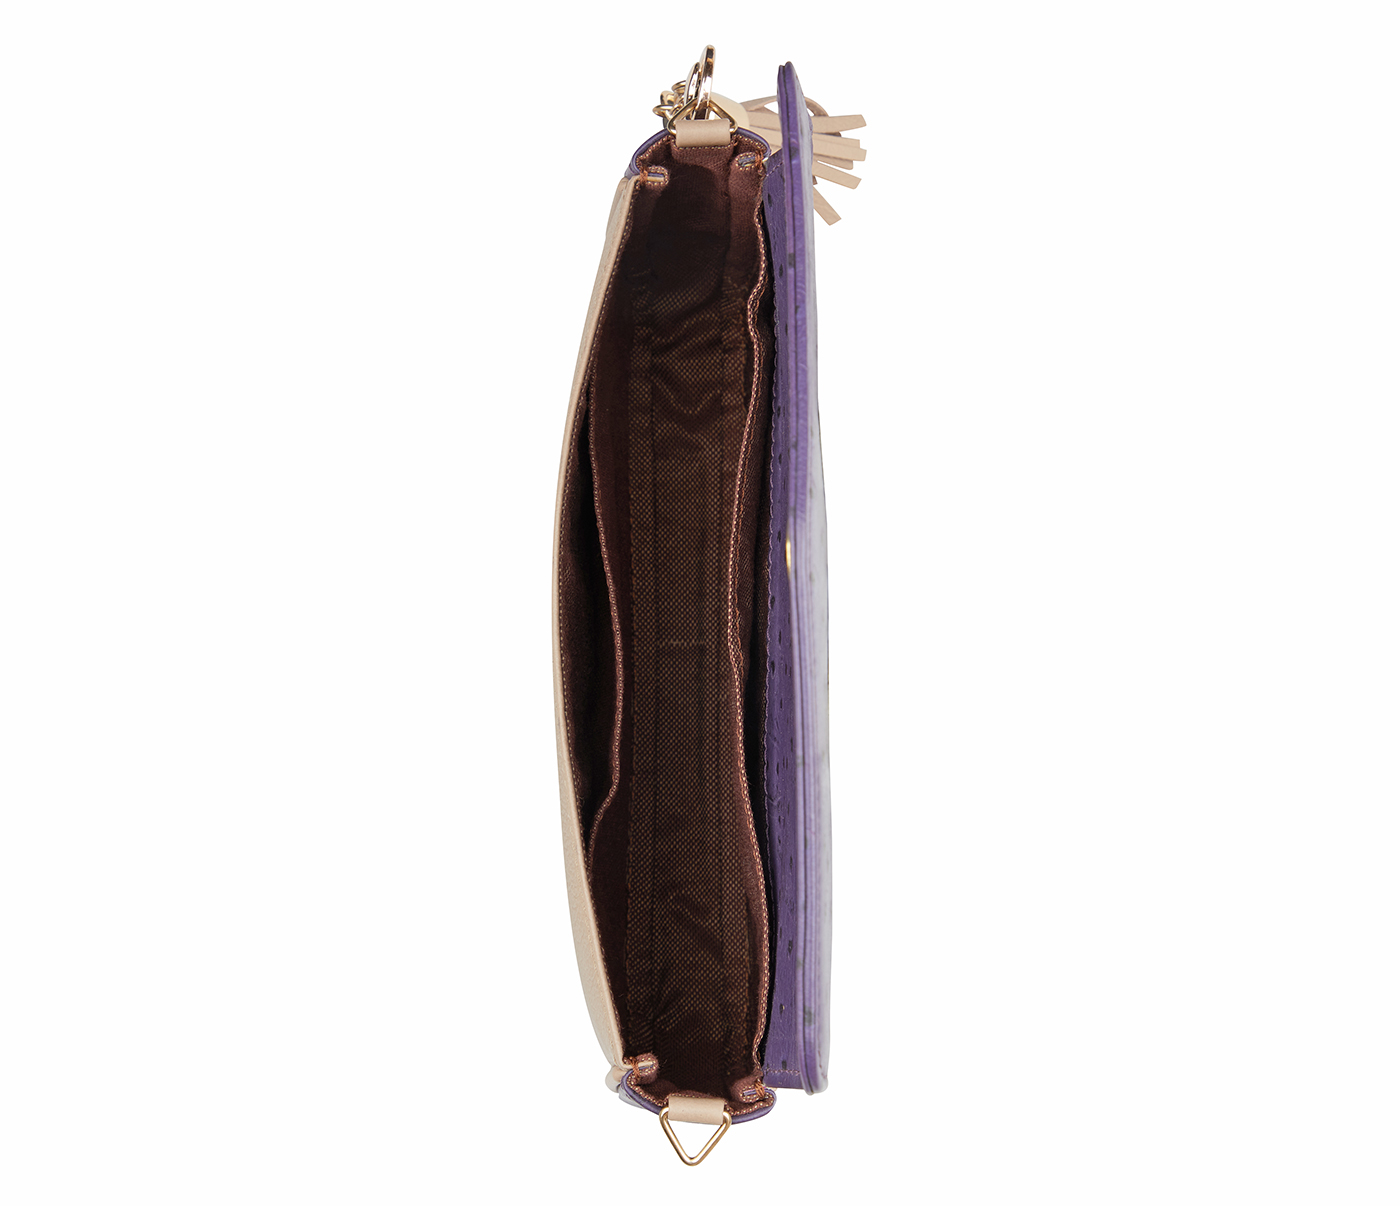 B901-Selena Sling Cross Body Bag In Genuine Leather- - Purple